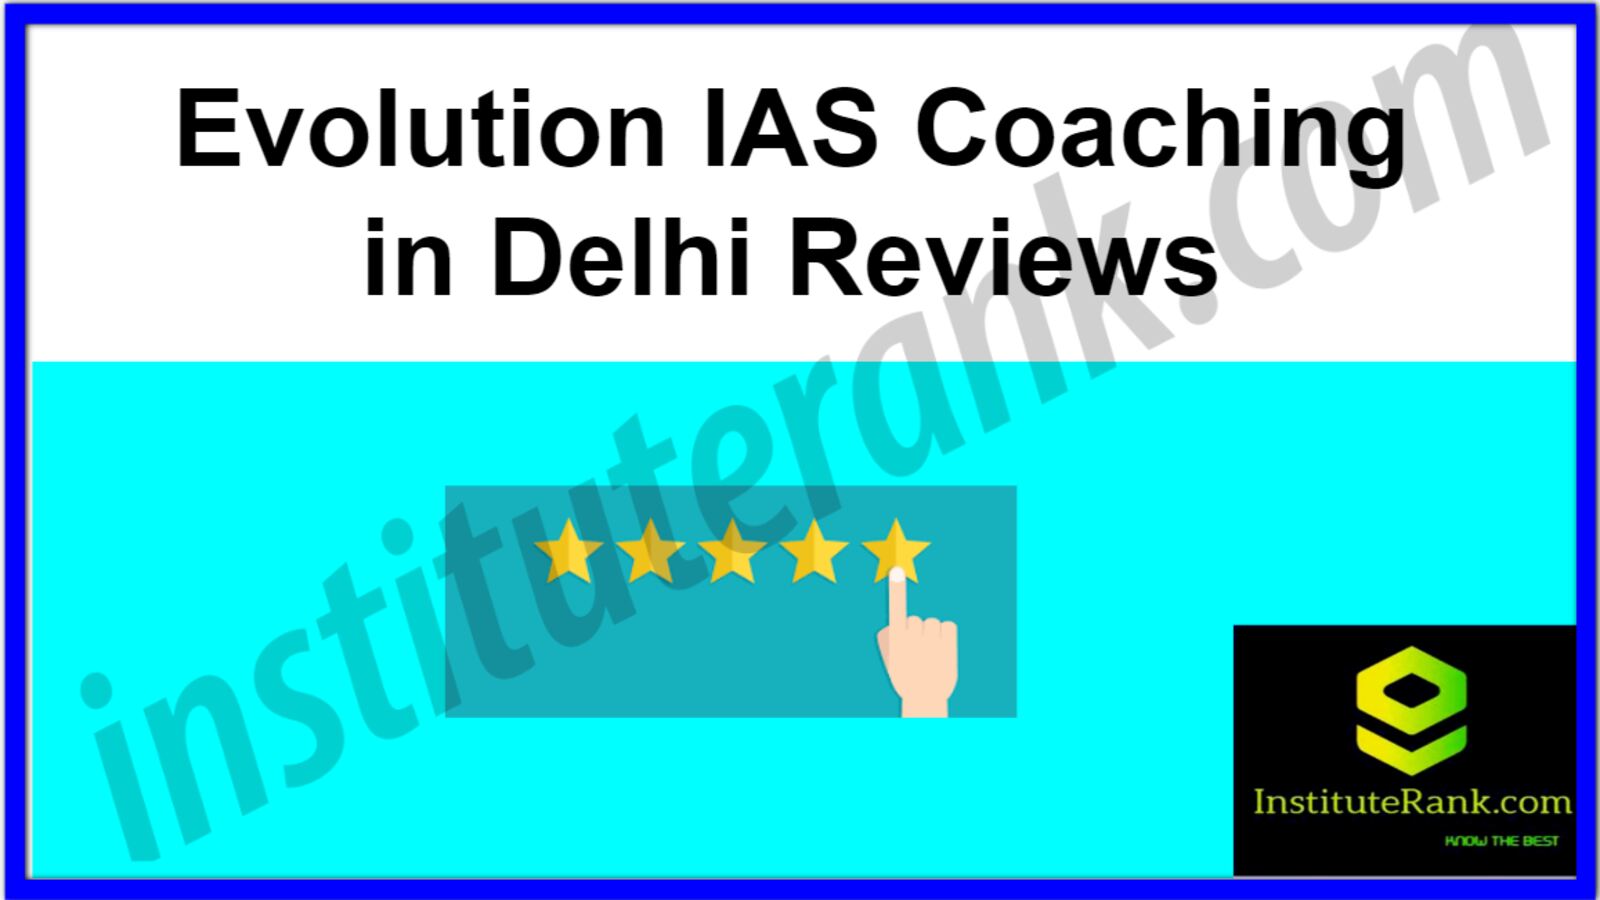 Evolution IAS Coaching in Delhi